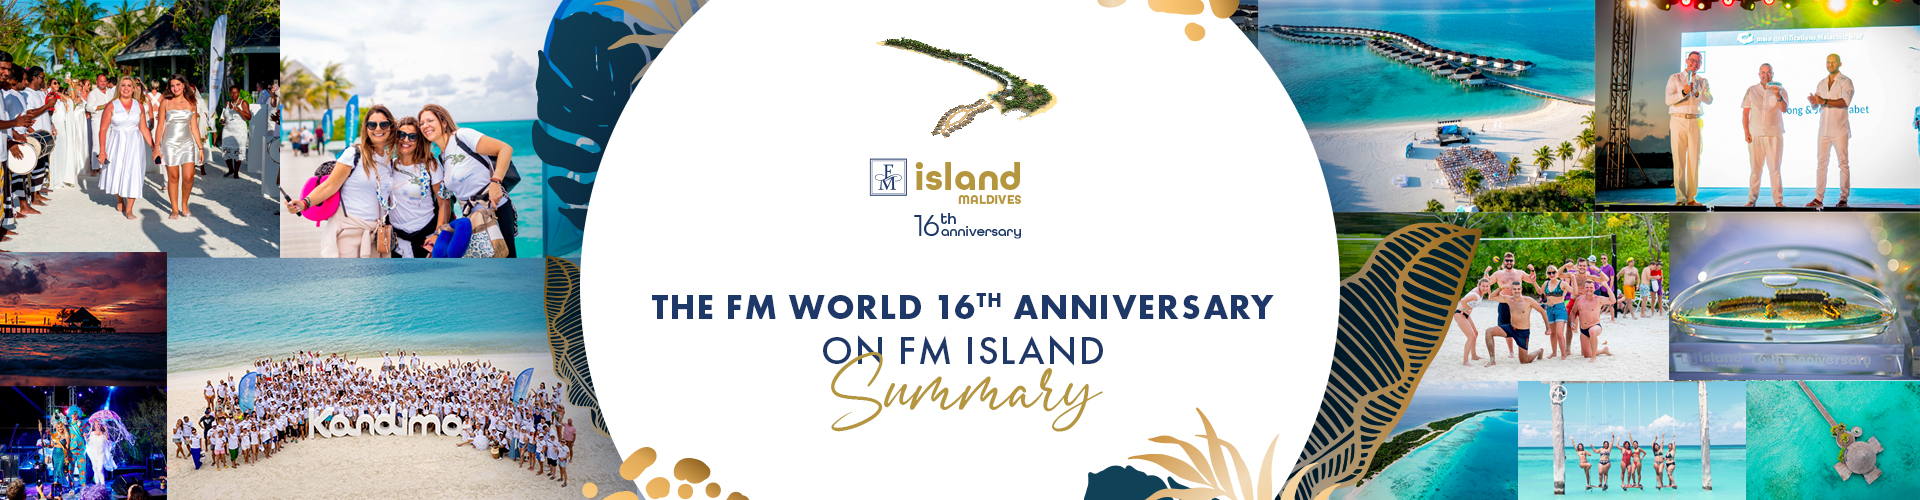 THE FM WORLD 16TH ANNIVERSARY - SUMMARY